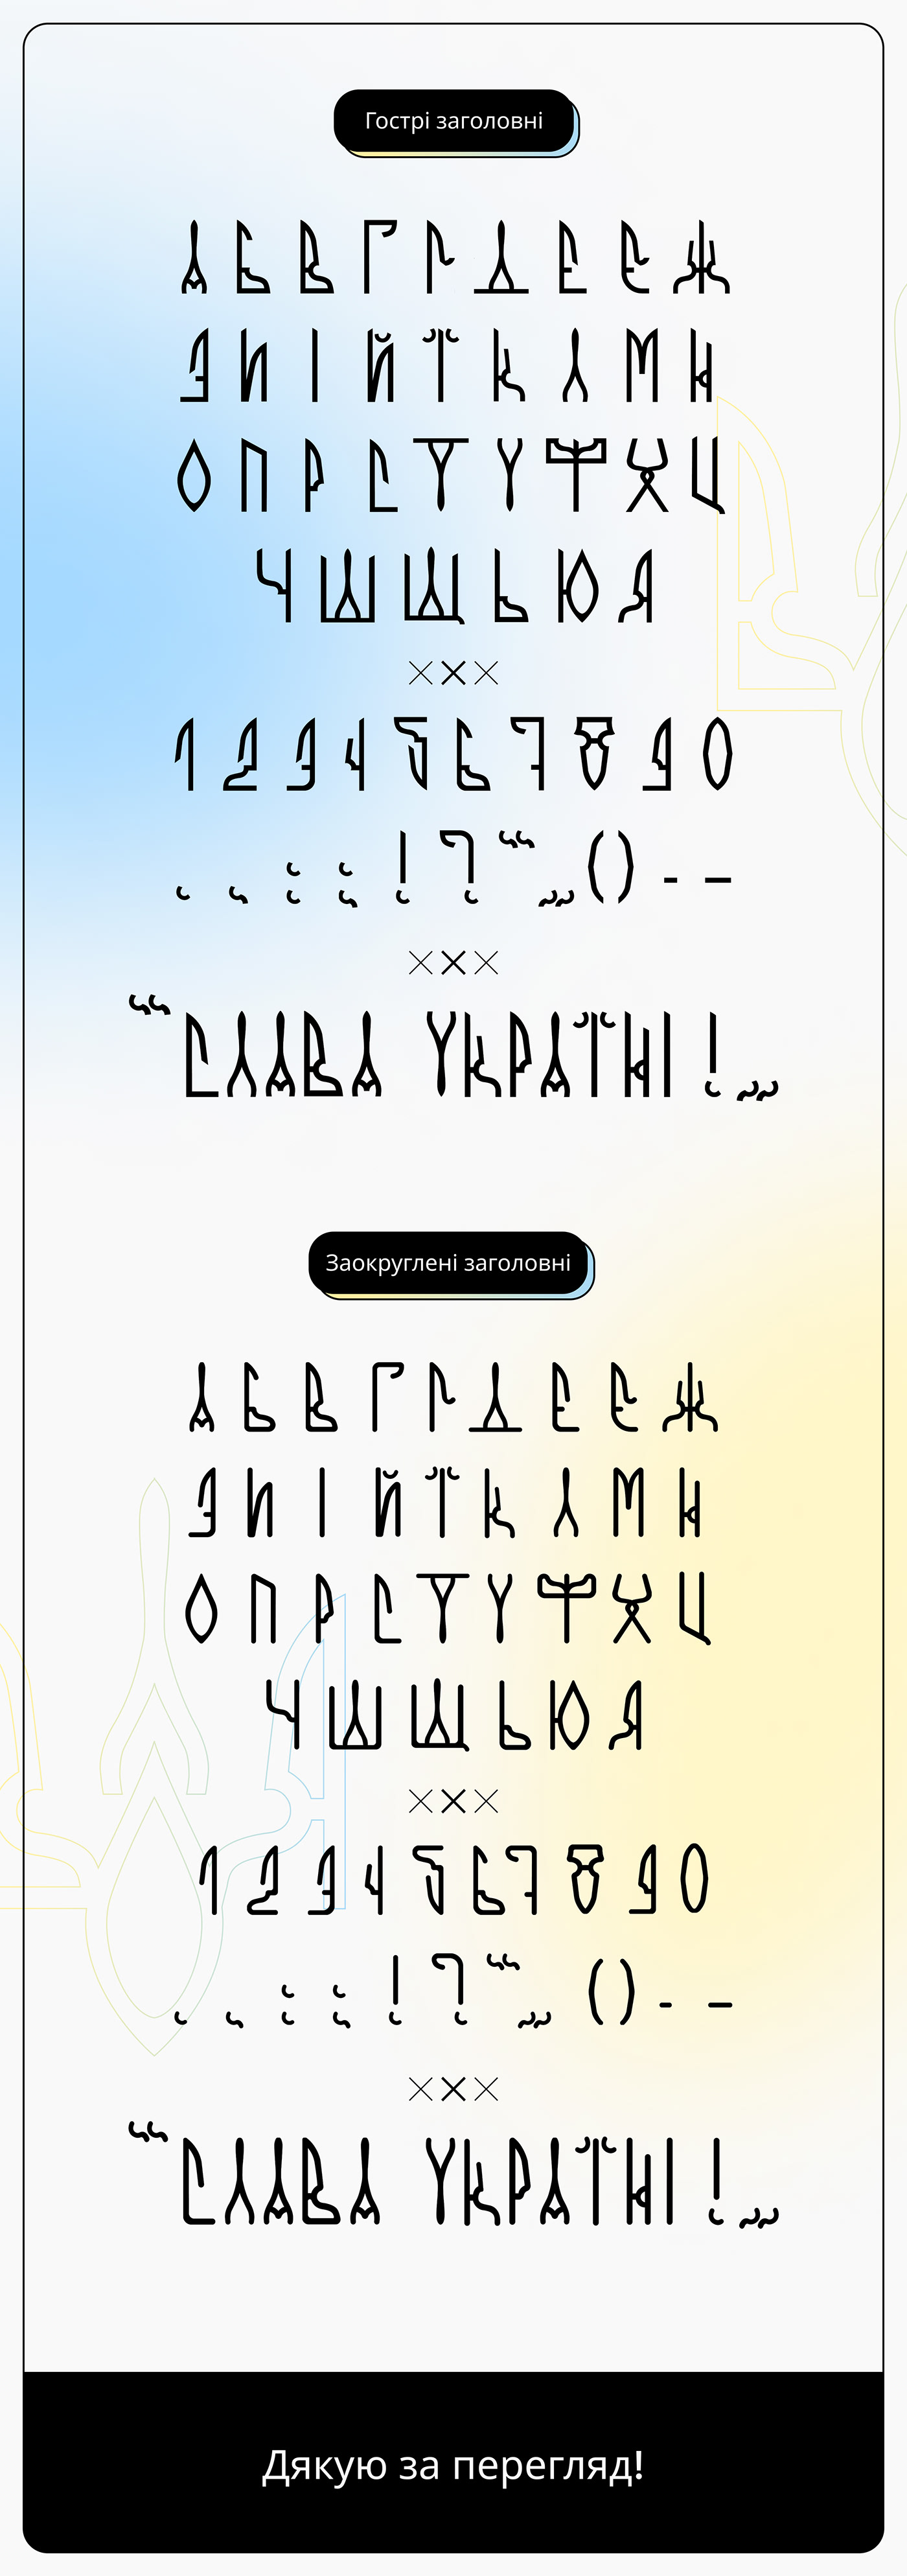 Cyrillic Cyrillic font font lettering Trident ukraine тризуб Україна шрифт